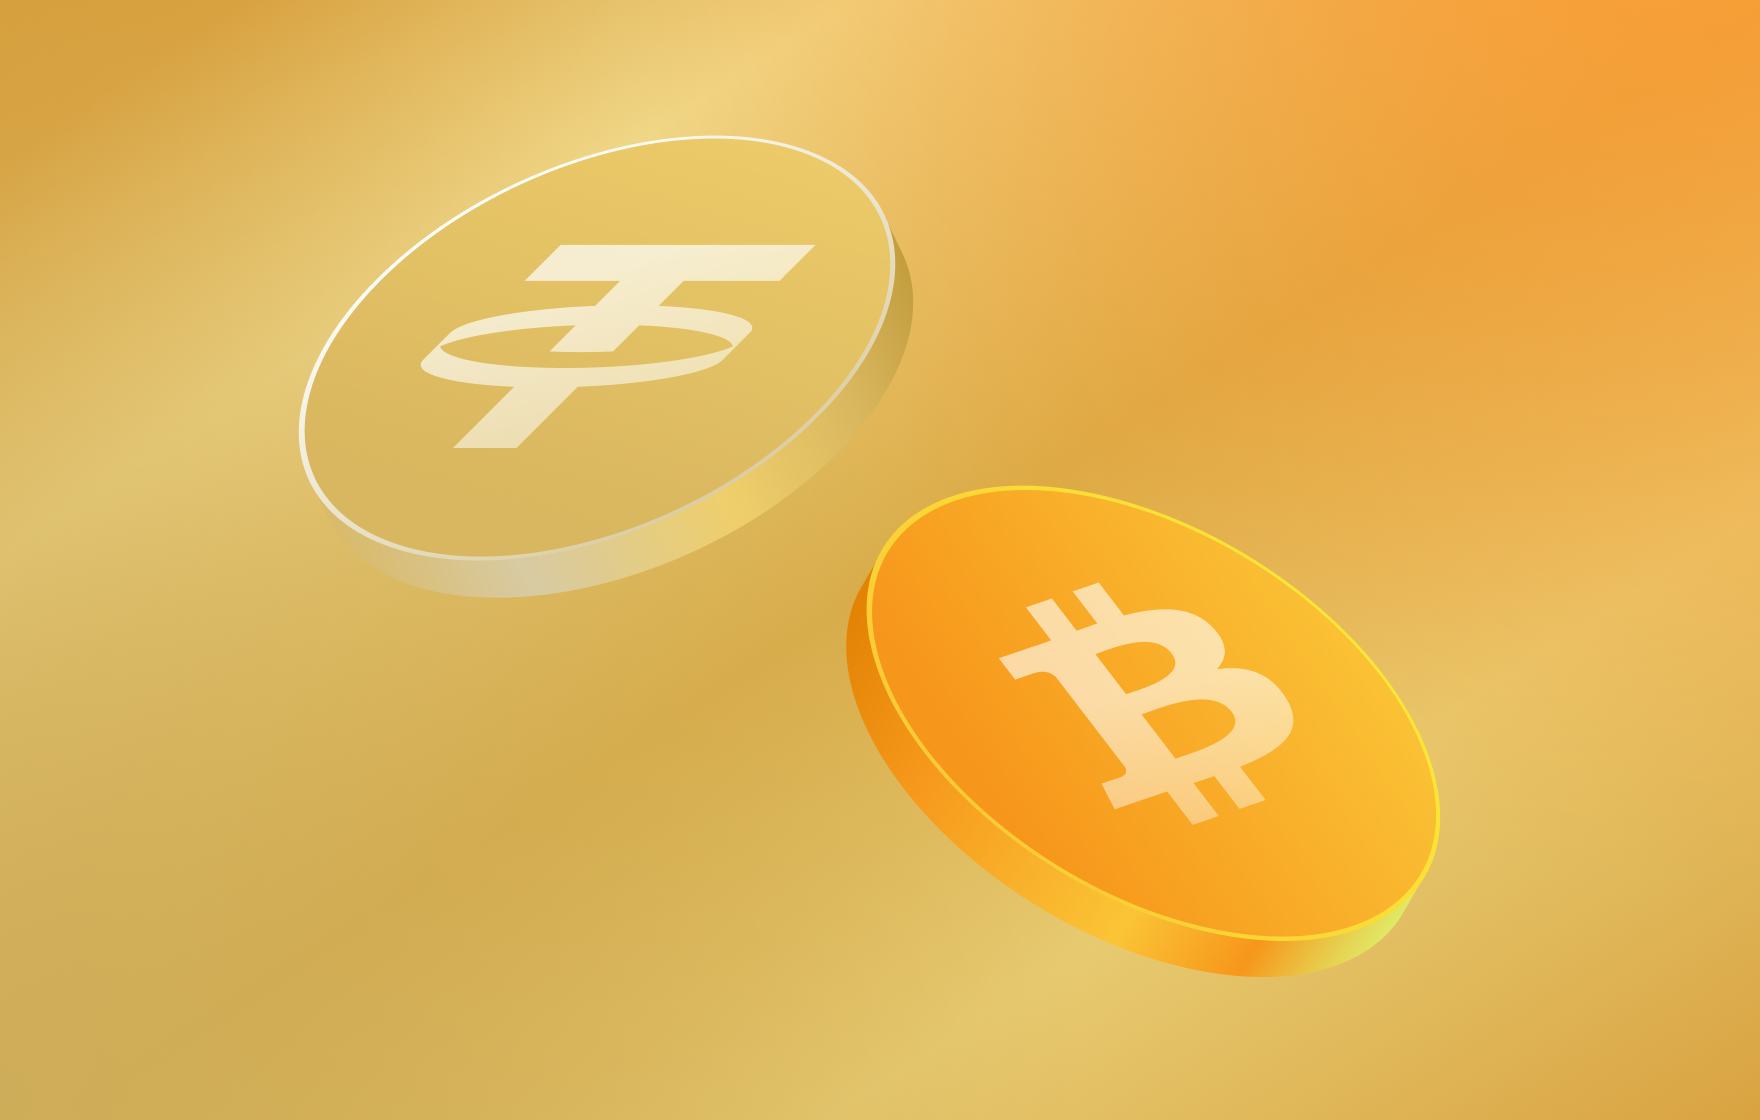 Why Bitcoin & Golden